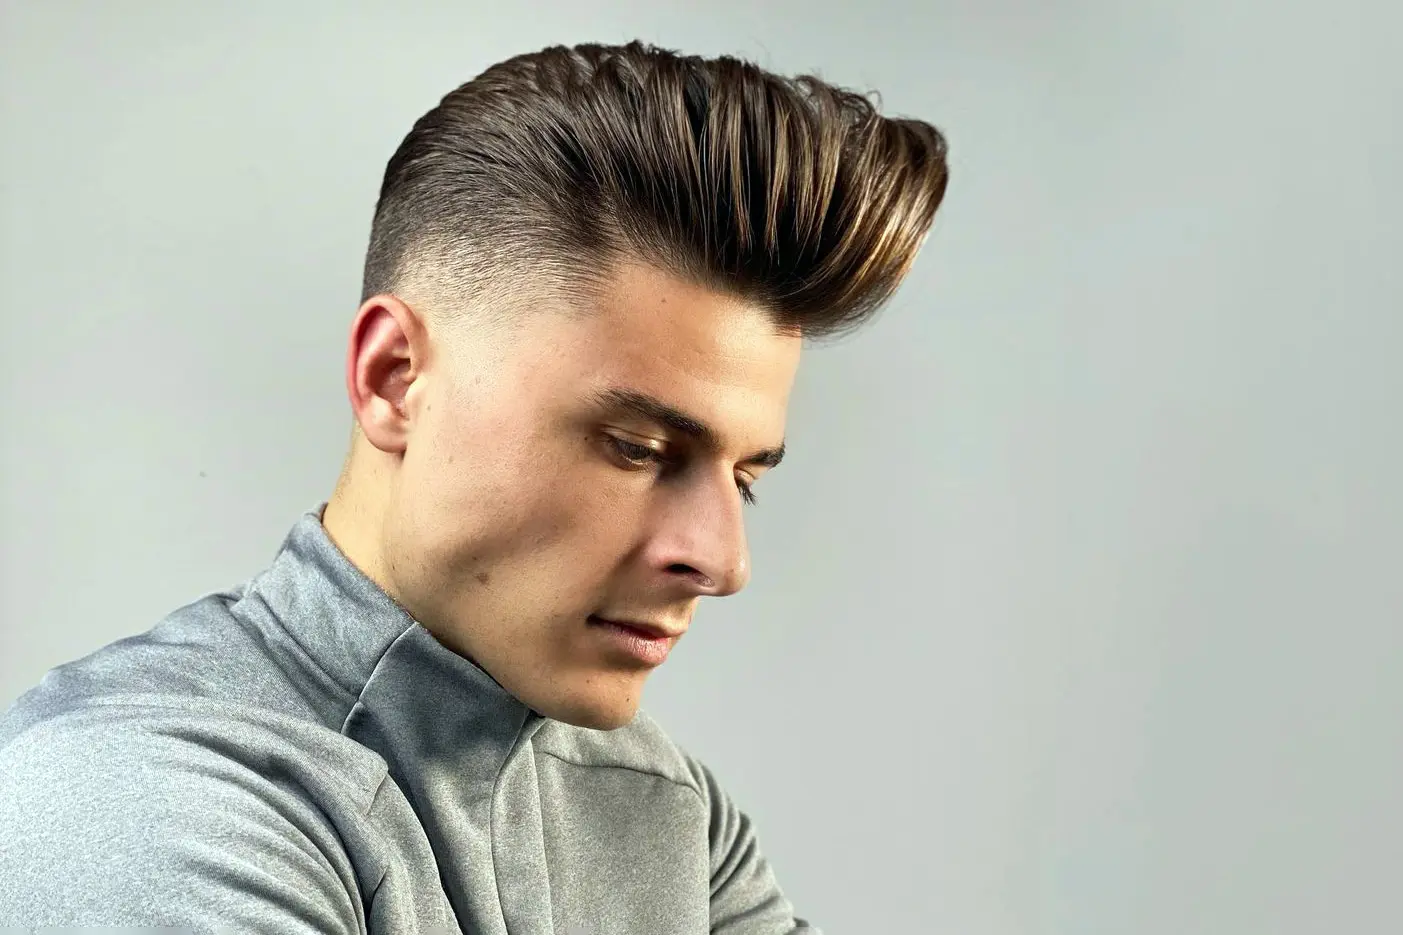 Men's undercut hairstyles